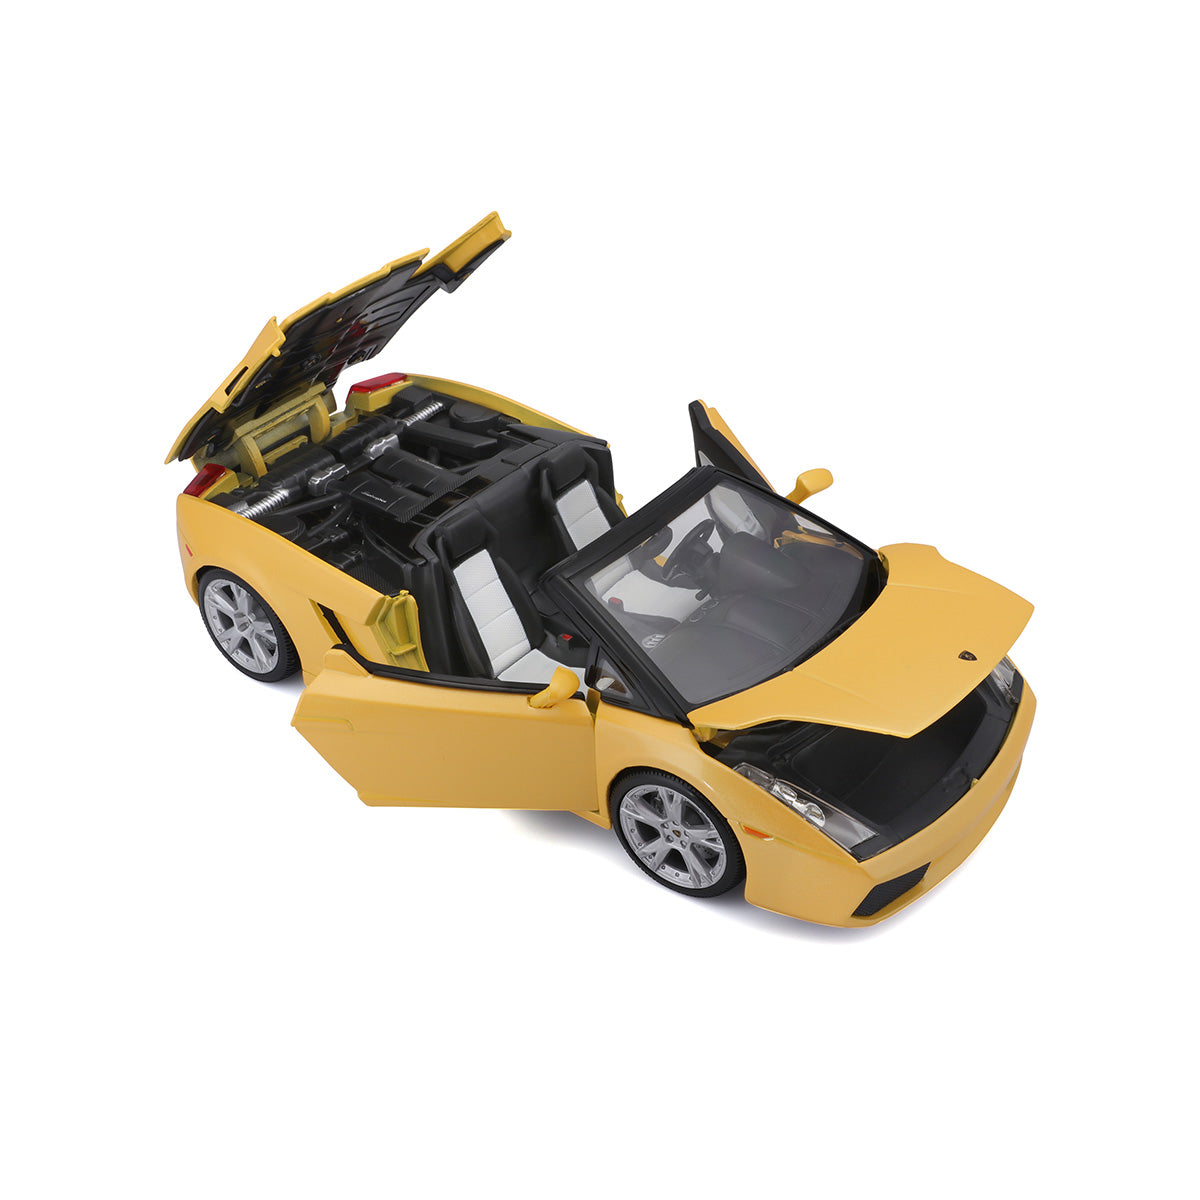 18-12016 - Bburago - 1:18 - Lamborghini Gallardo Spyder - Met Gialla